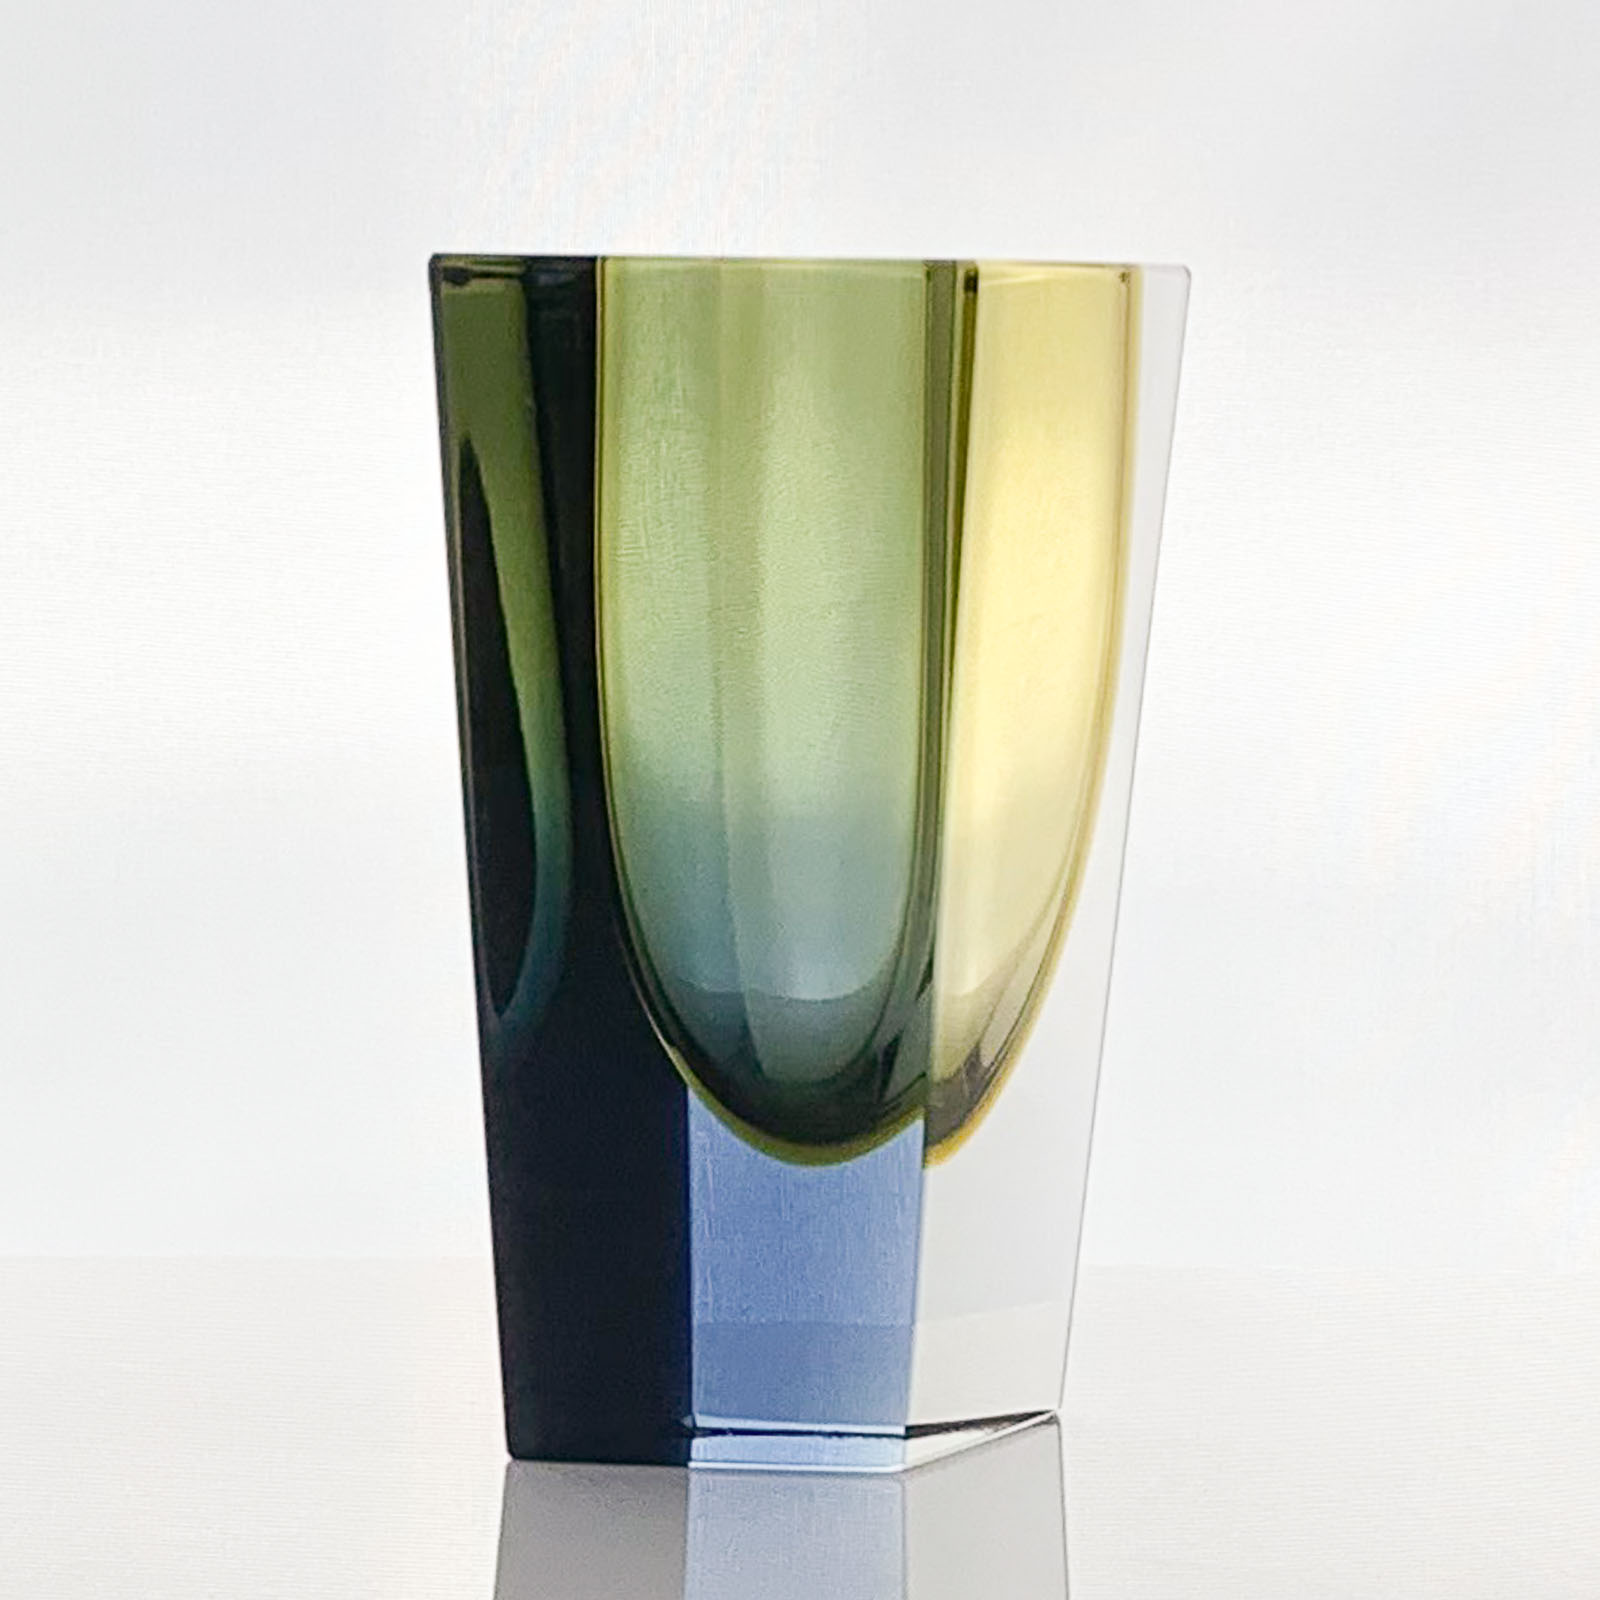 Kaj Franck - "Prisma", glass Art-object, model KF 215 - Nuutajärvi-Notsjö Finland, 1963